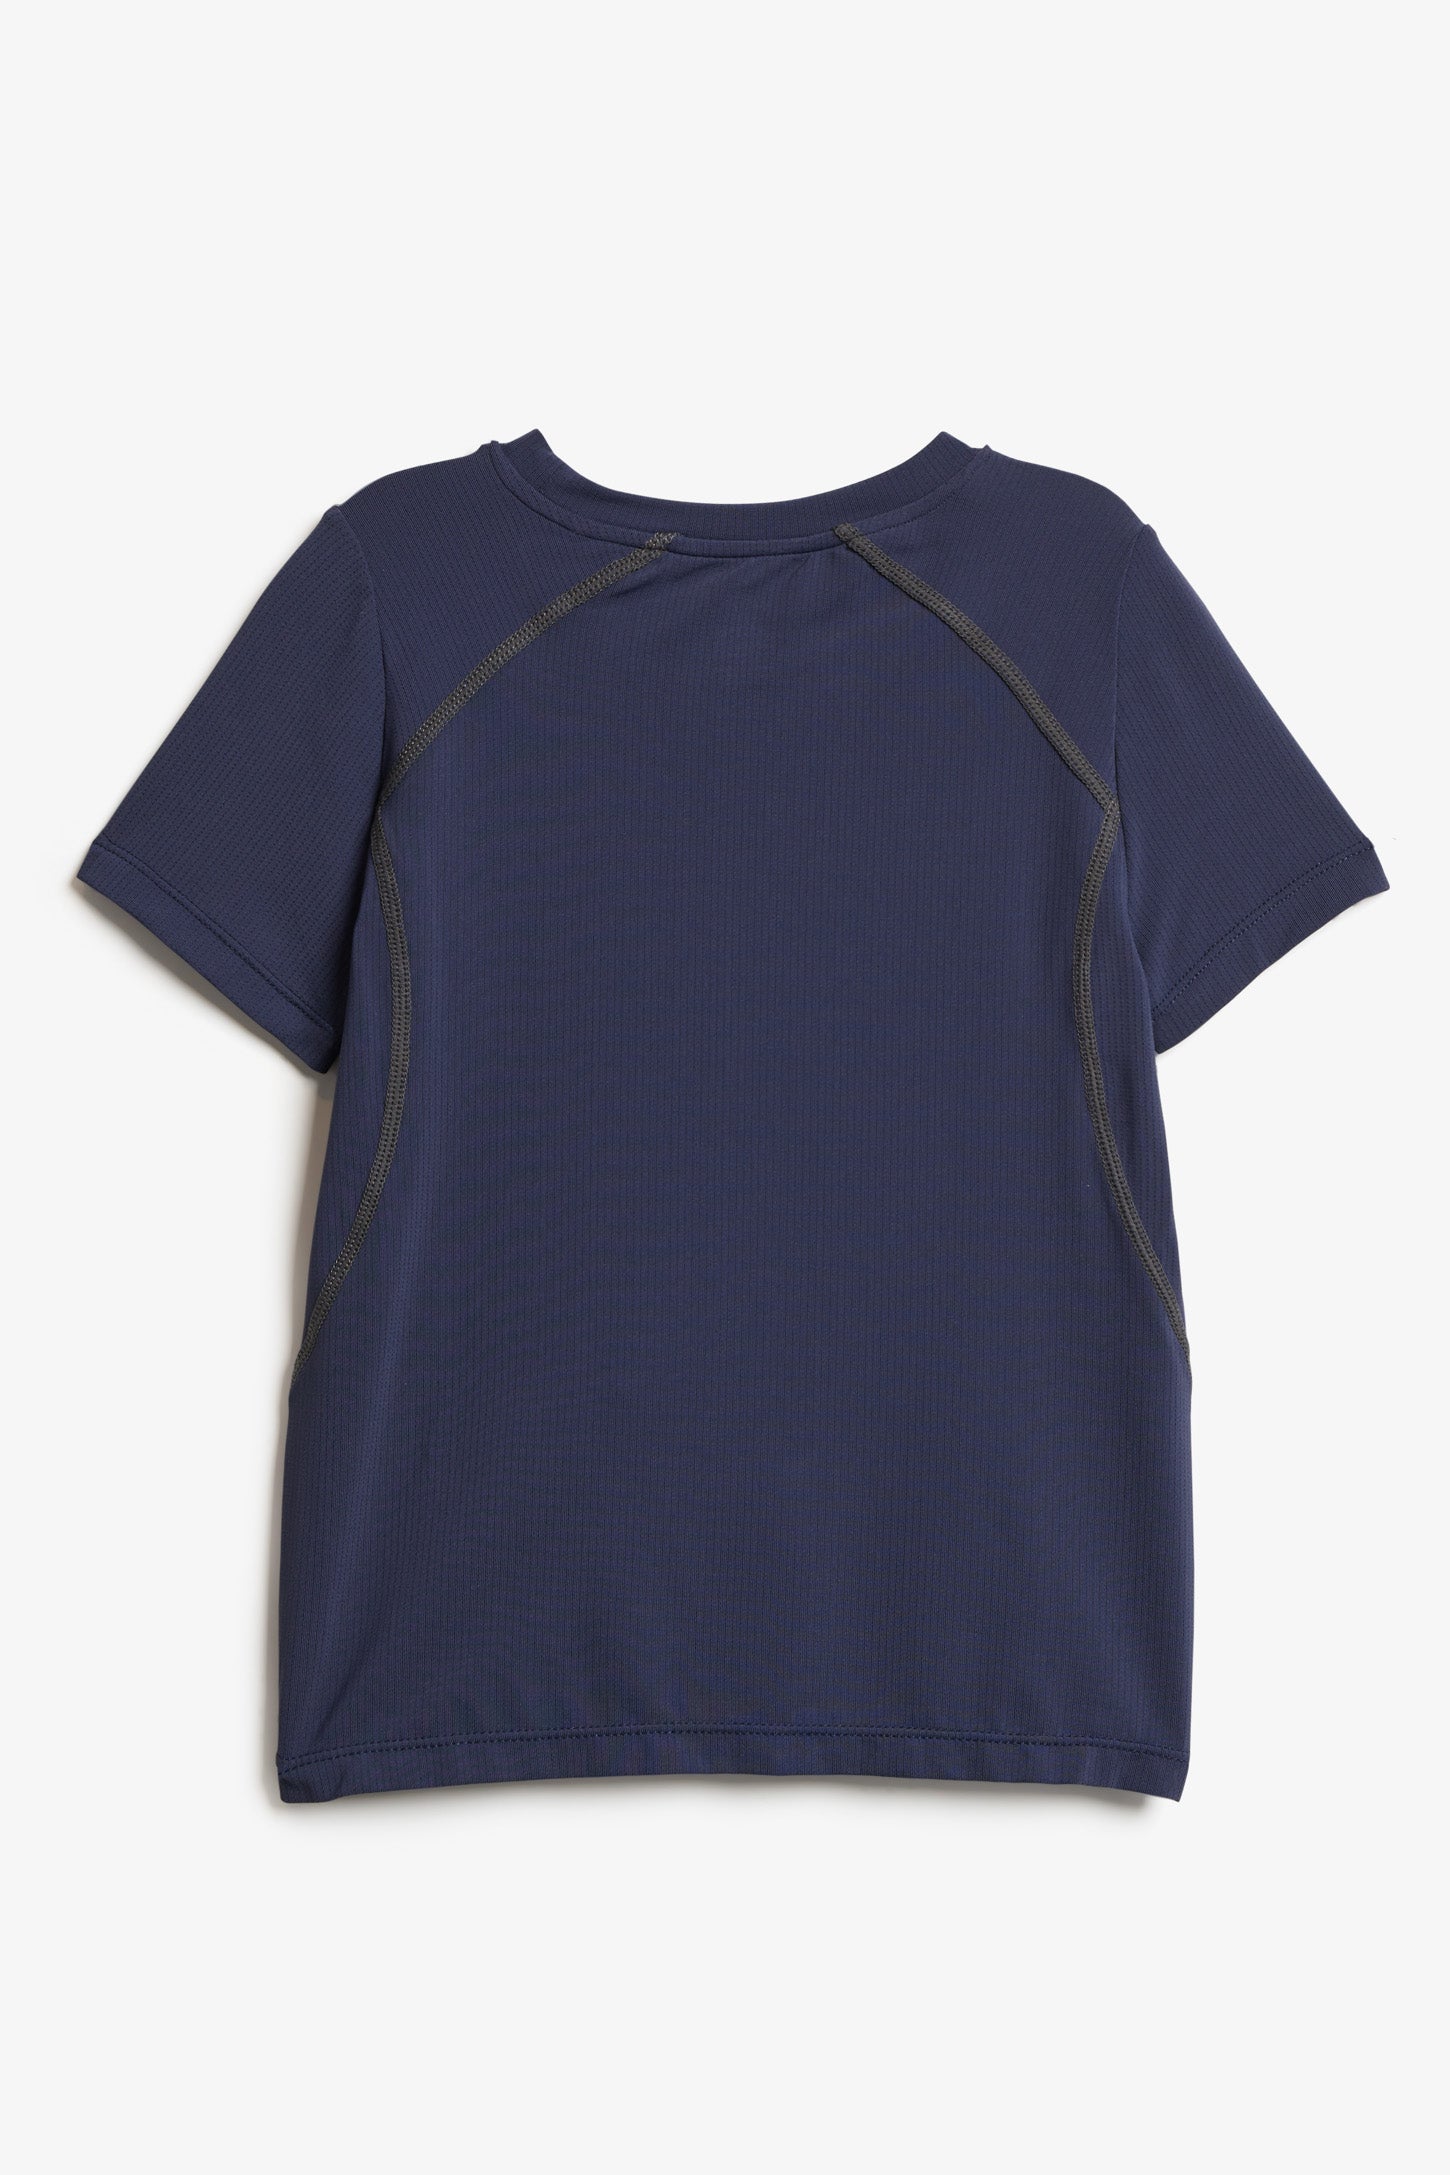 T-shirt HR en microfibres, 2/20$ - Enfant garçon && DENIM